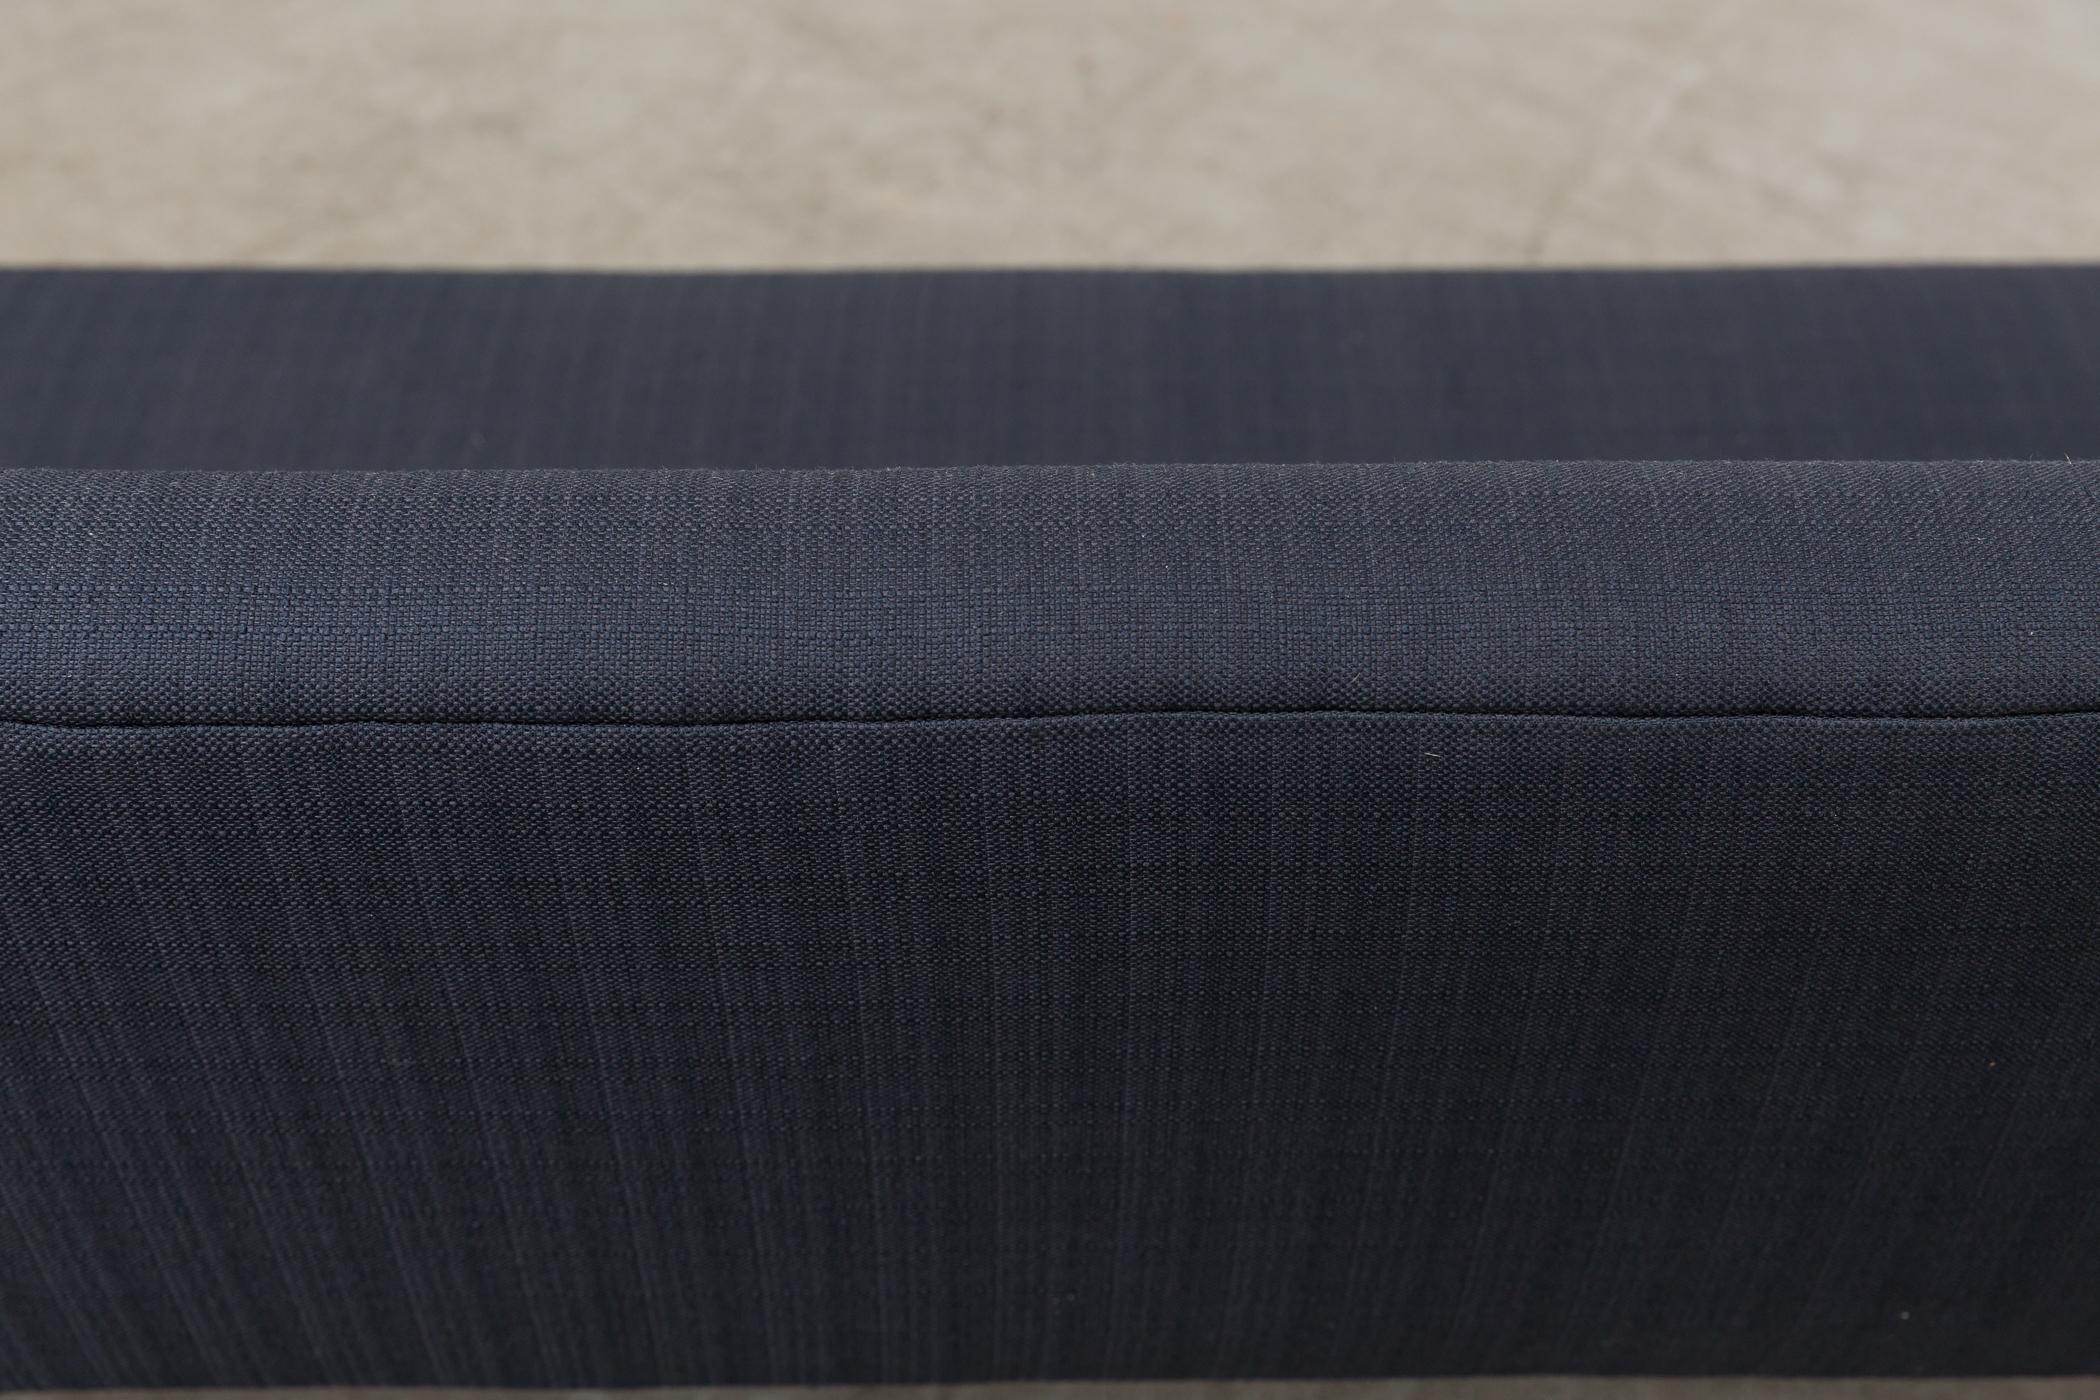 Upholstery Martin Visser BZ29 Sofa for 't Spectrum w/ Navy Fabric, Black Frame & Wood Arms For Sale